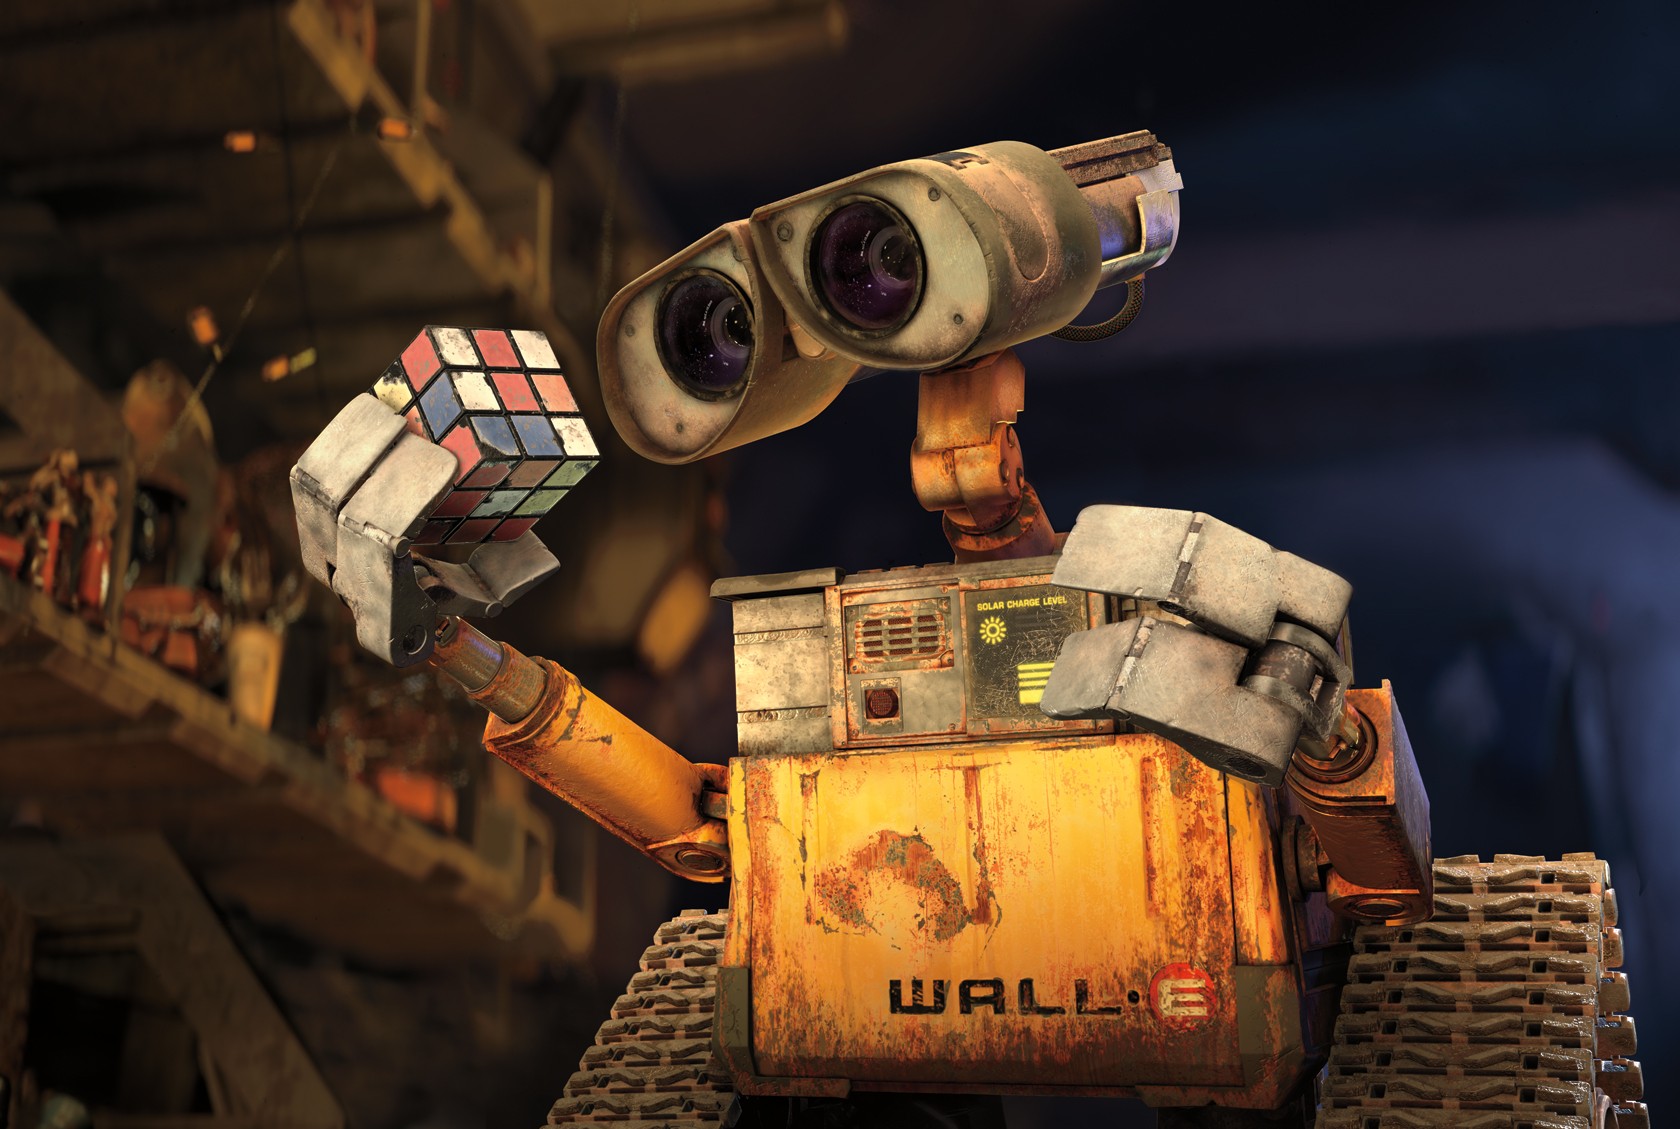 General 1680x1129 Pixar Animation Studios Disney Pixar WALL-E Rubik's Cube cube movies animated movies 3D Blocks